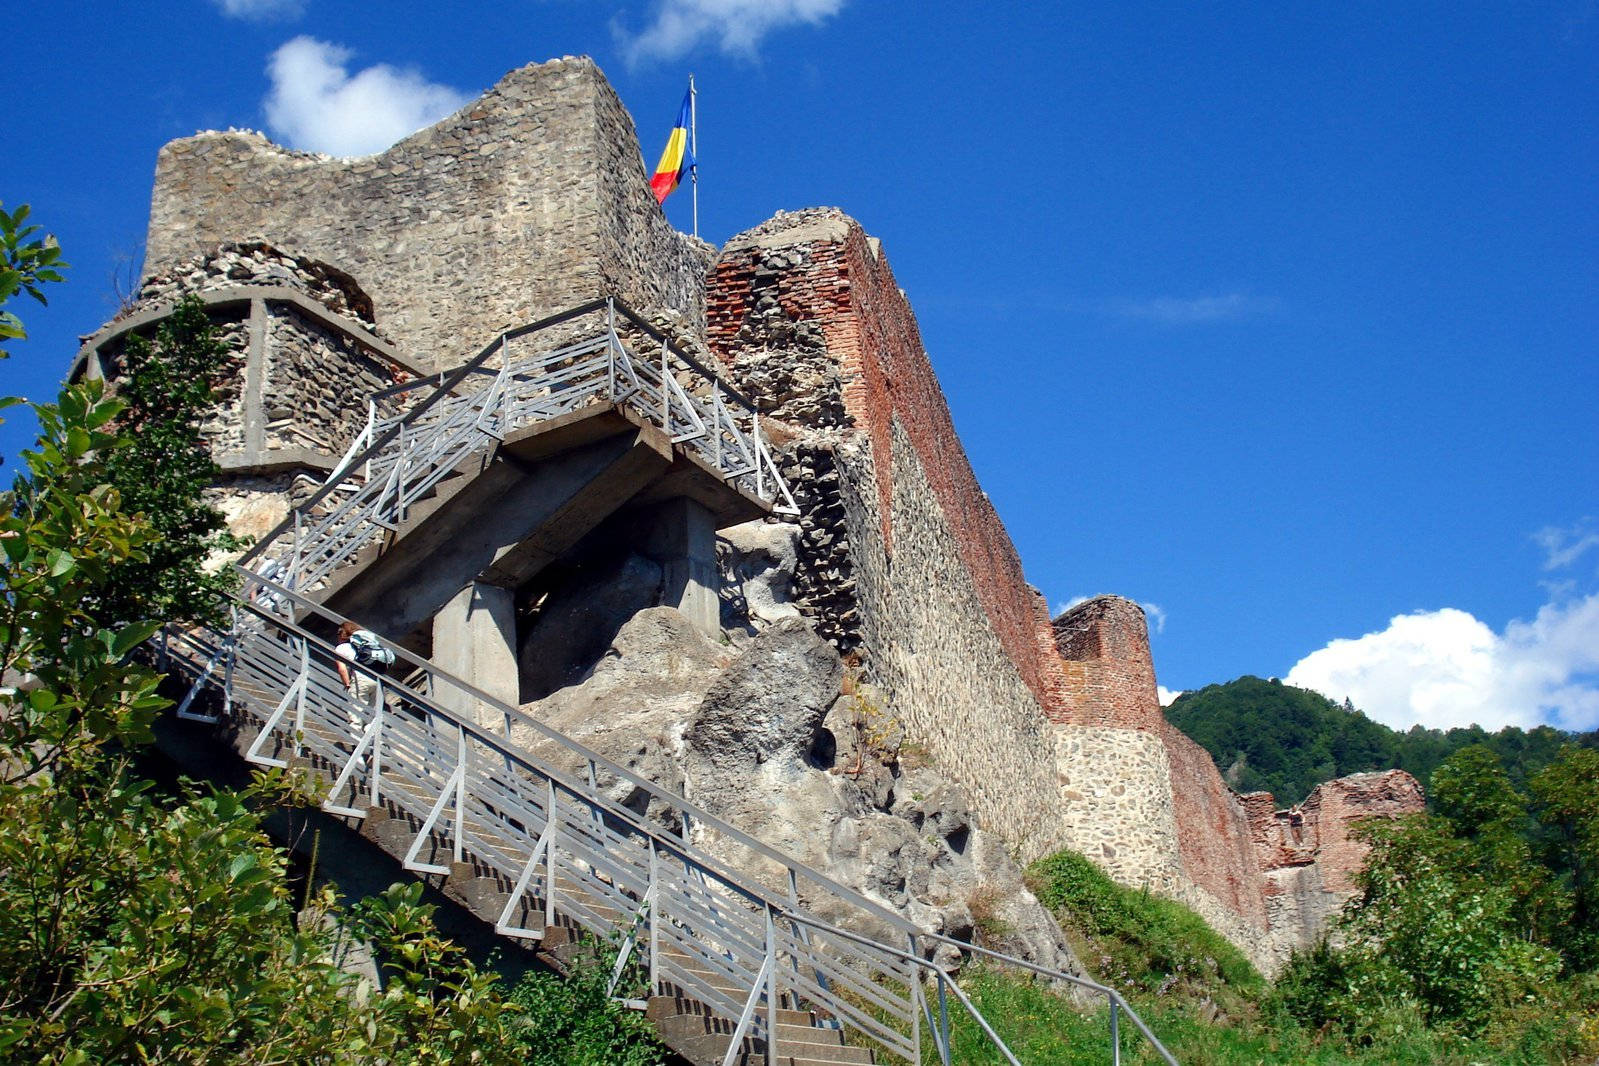 Caption: Historic Poenari Castle, Romania Background